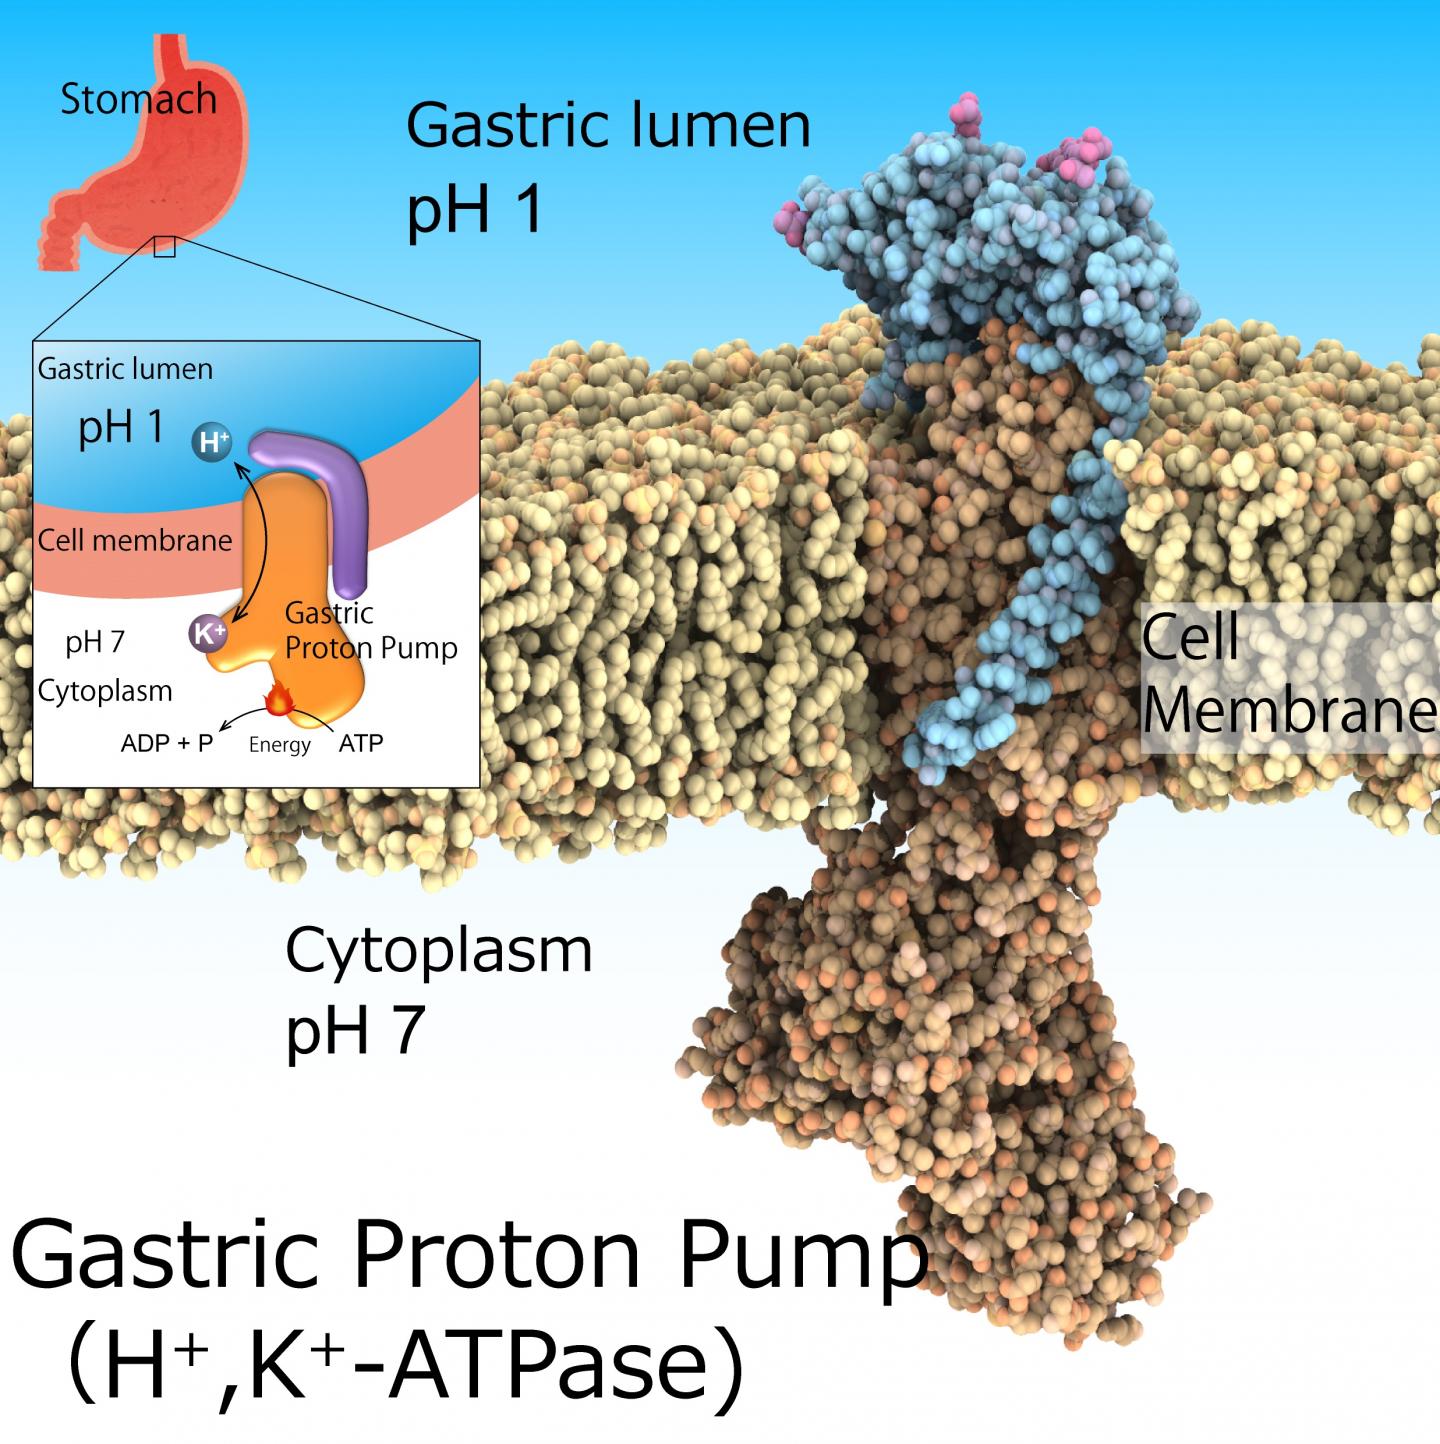 Gastric Proton Pump, H+,K+-ATPase